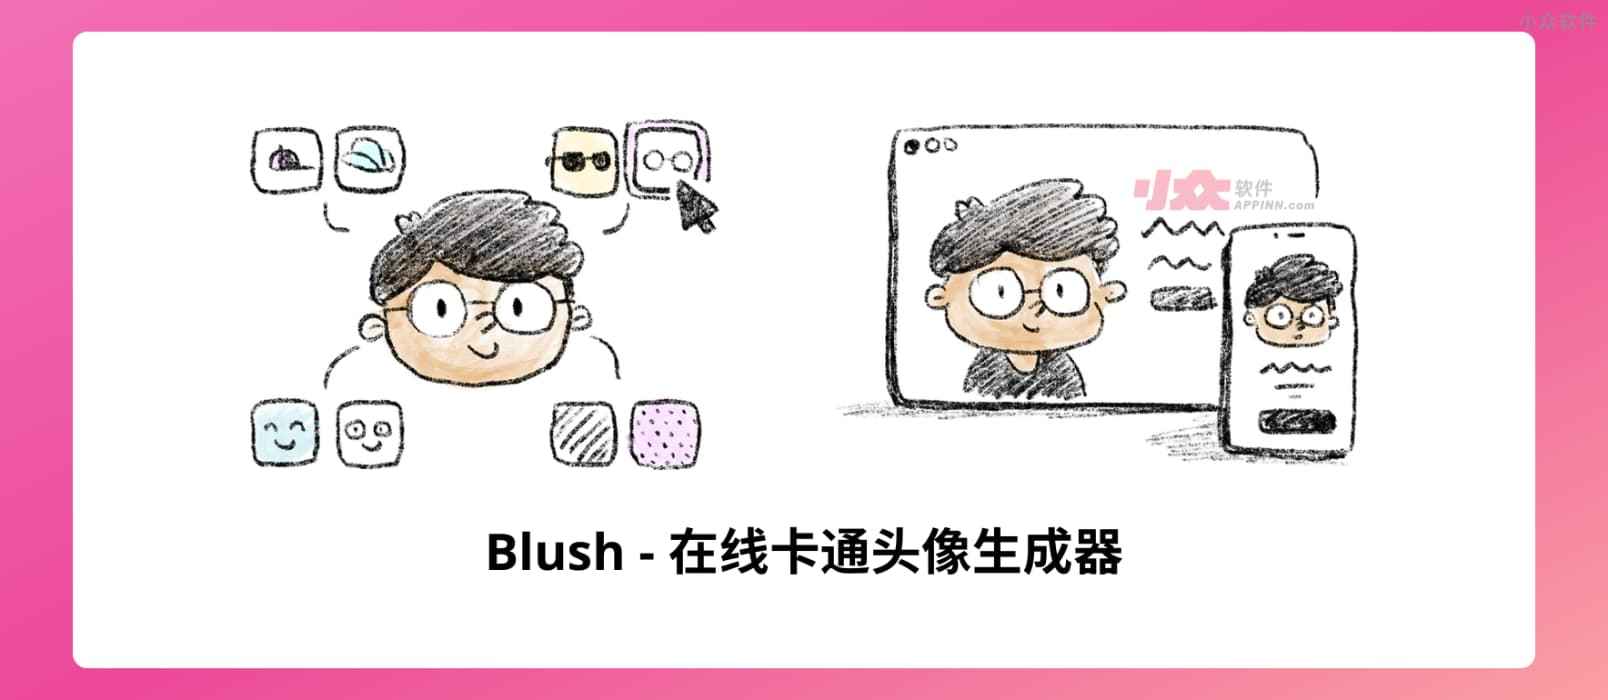 Blush – 在线卡通头像生成器，免费、可商用，无需注明出处